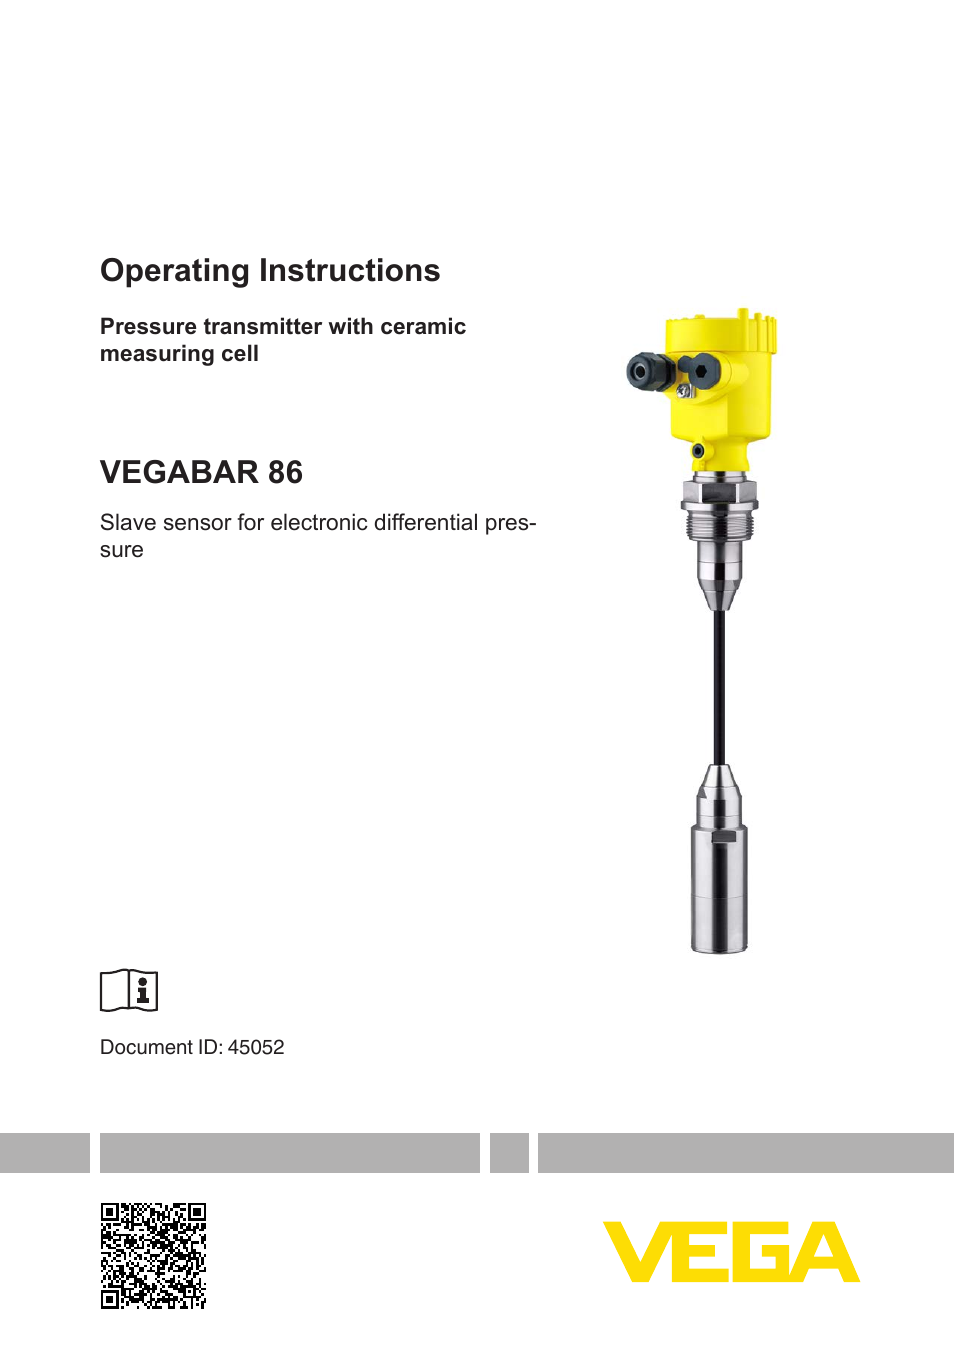 VEGABAR 86 Save sensor - Operating Instructions